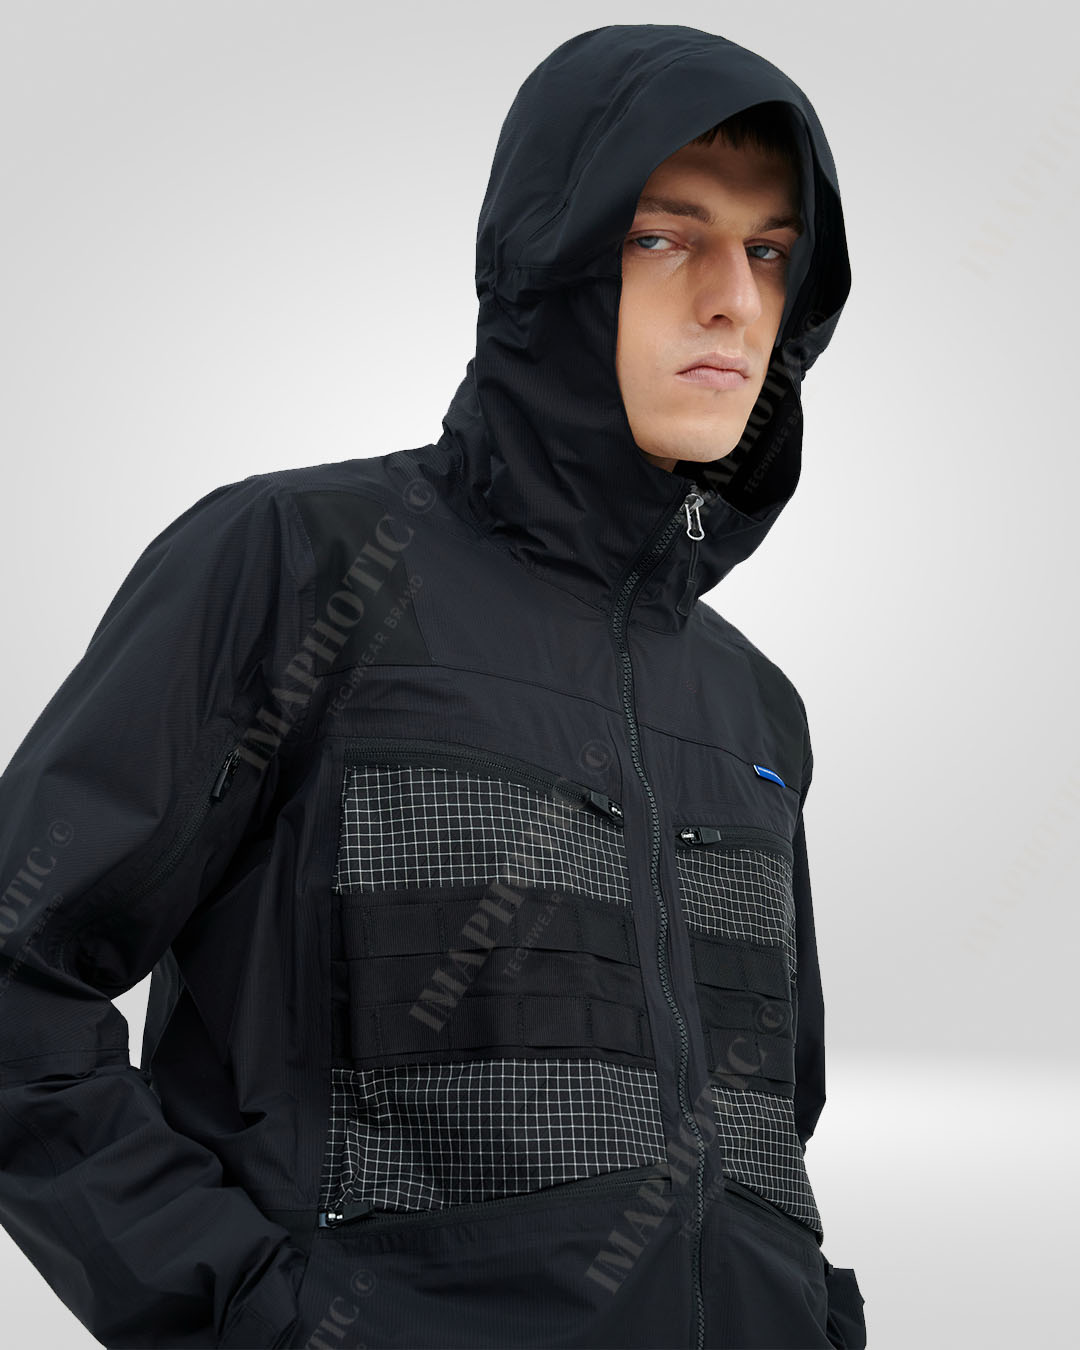 Adventurer\'s Hooded Outdoor Jacket - Defy the Elements in Style – Imaphotic | Windbreakers